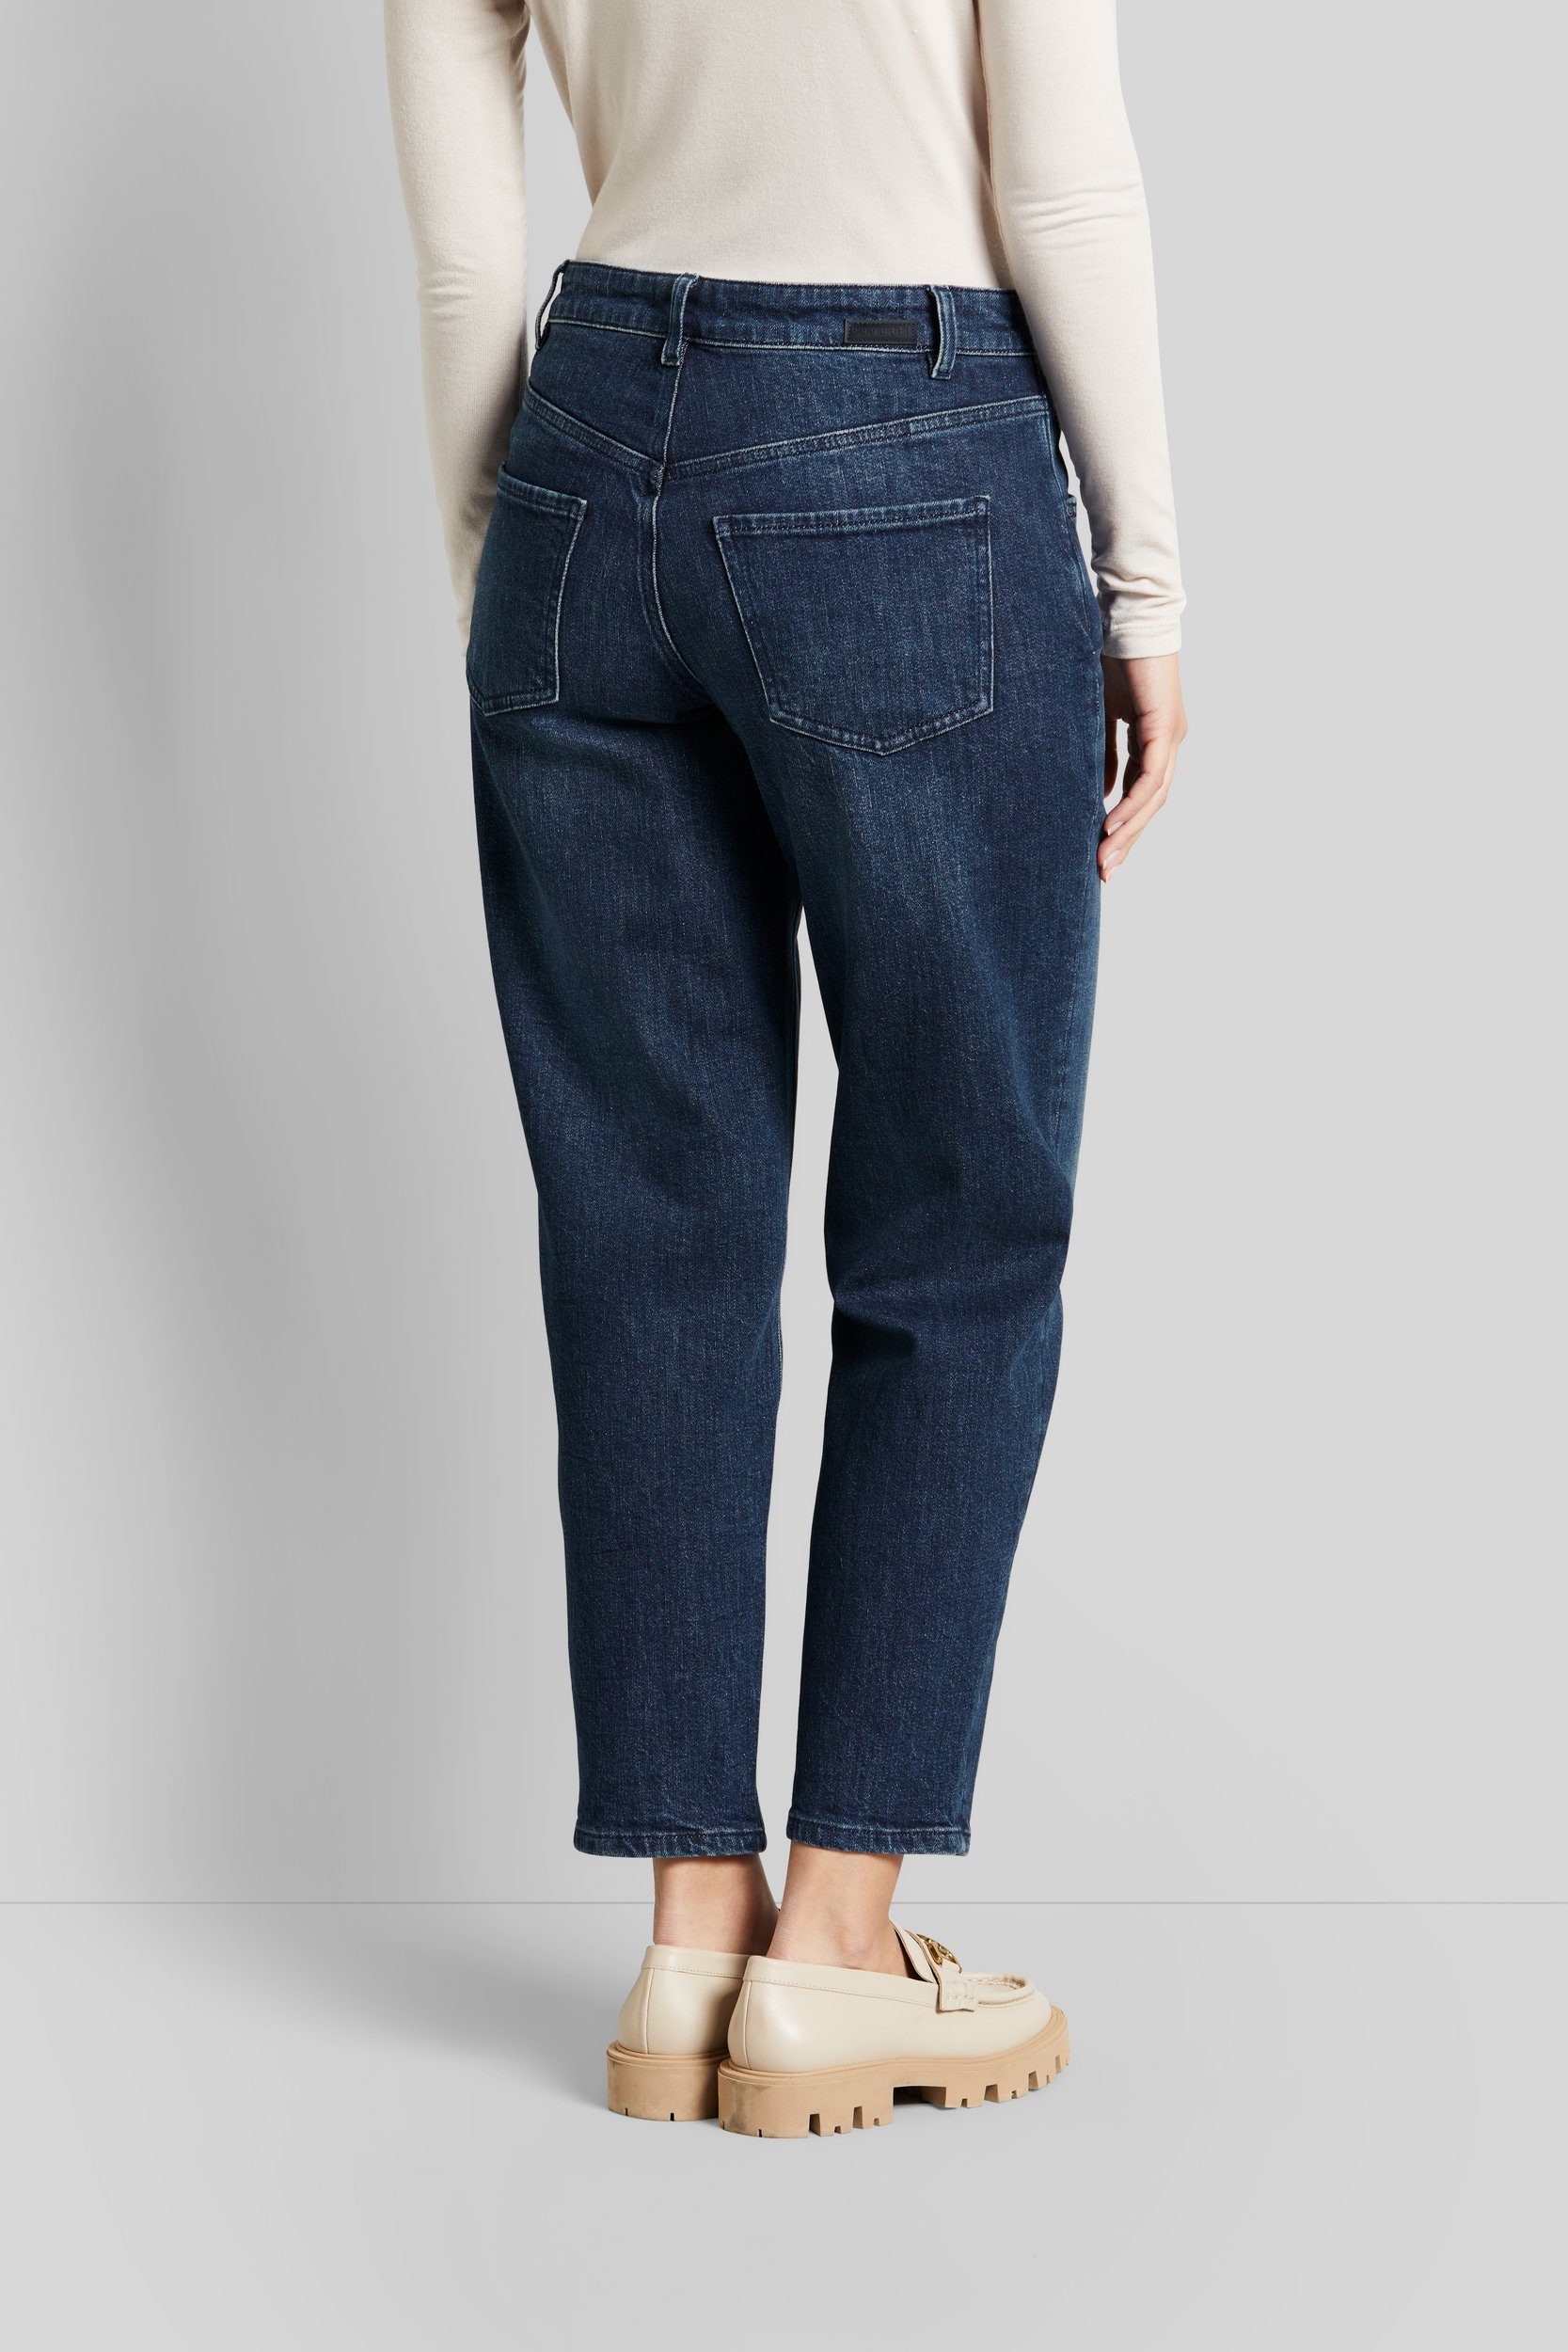 lockerem 5-Pocket-Jeans mit Schnitt bugatti